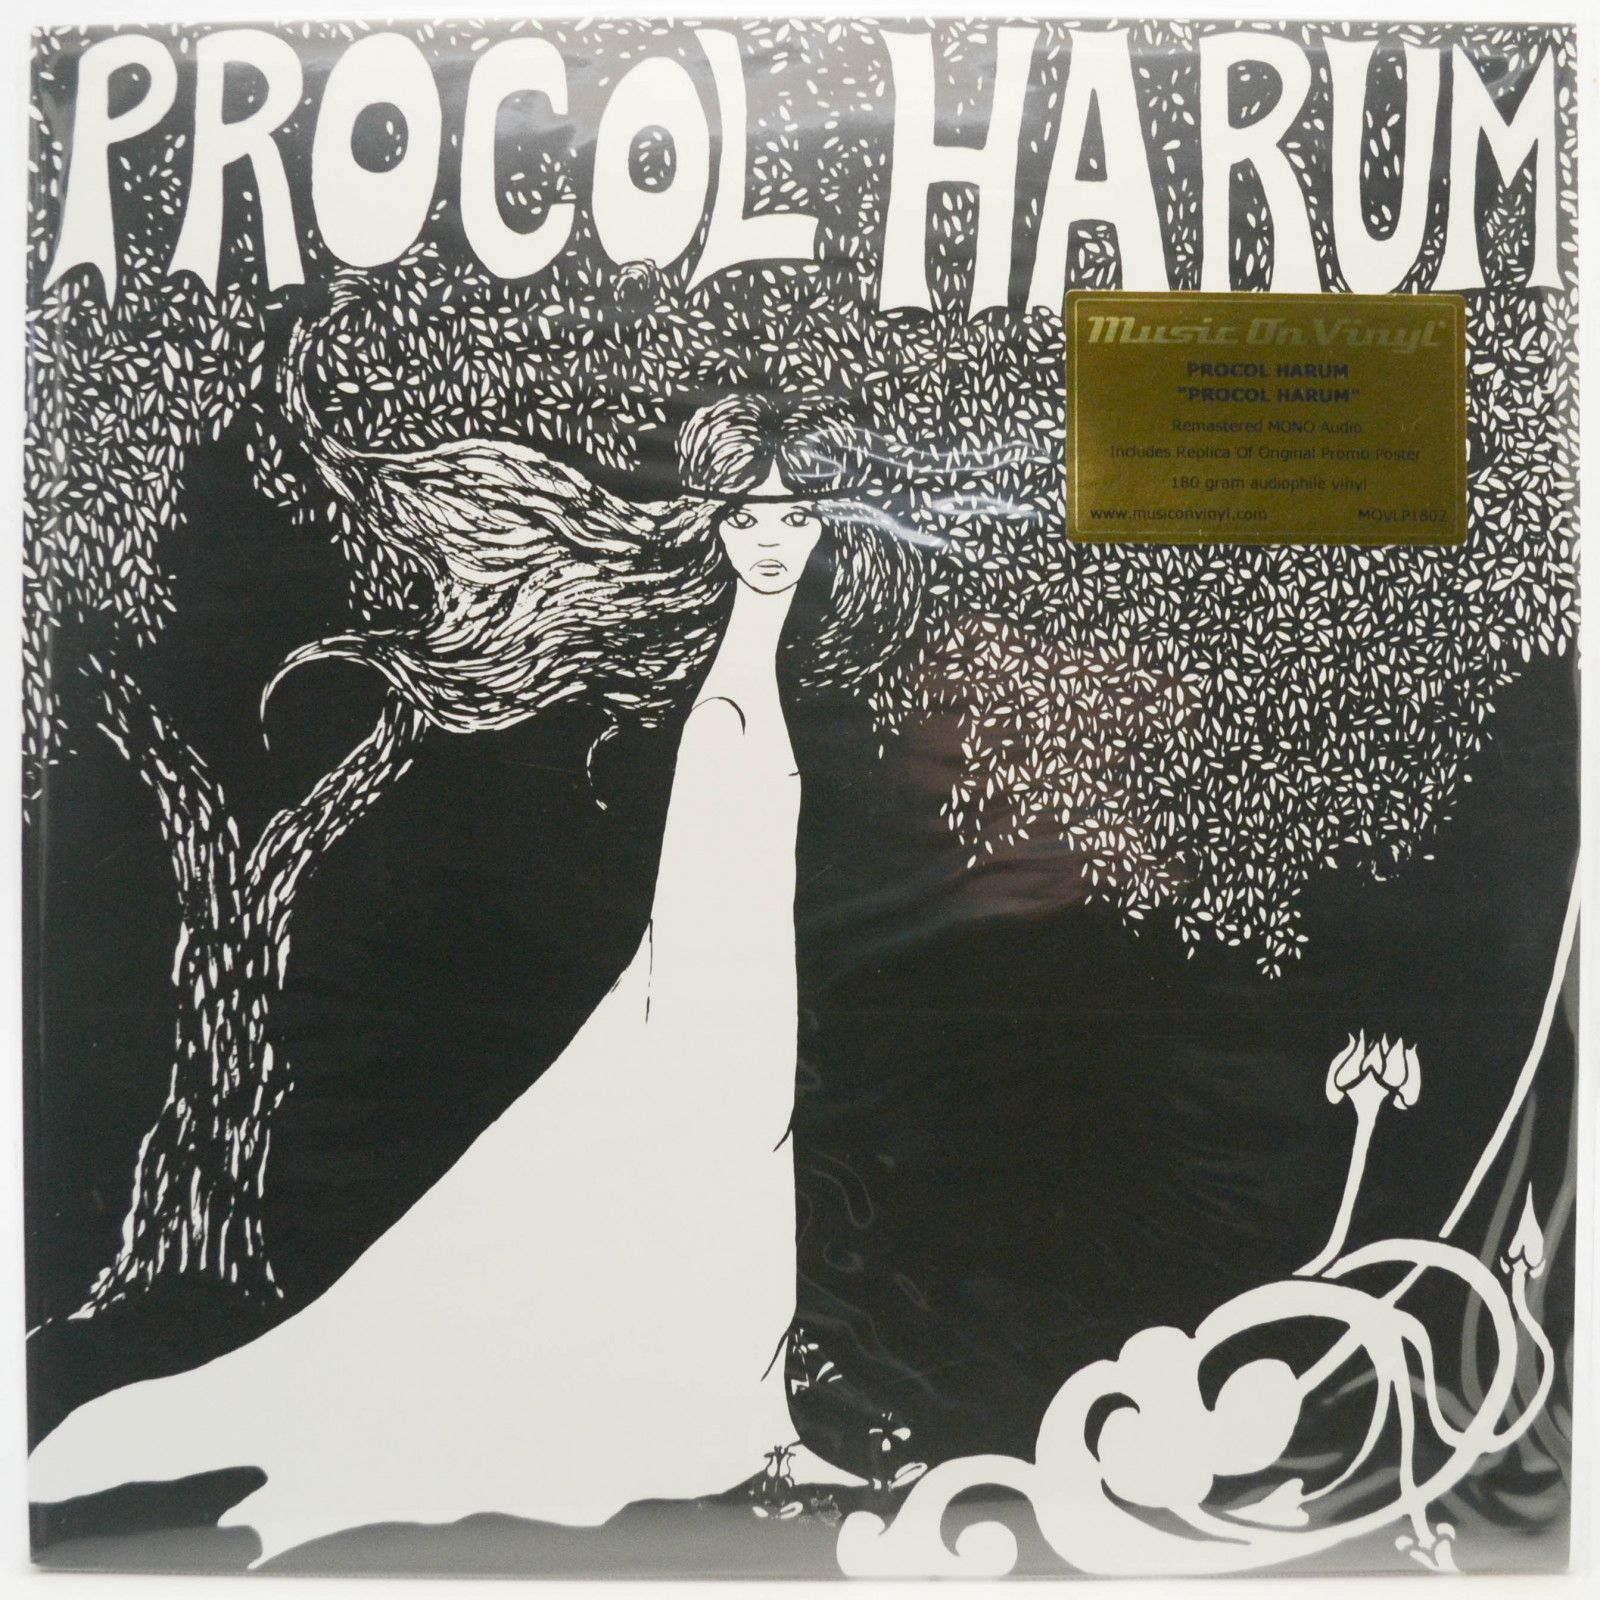 Procol Harum — Procol Harum, 1967